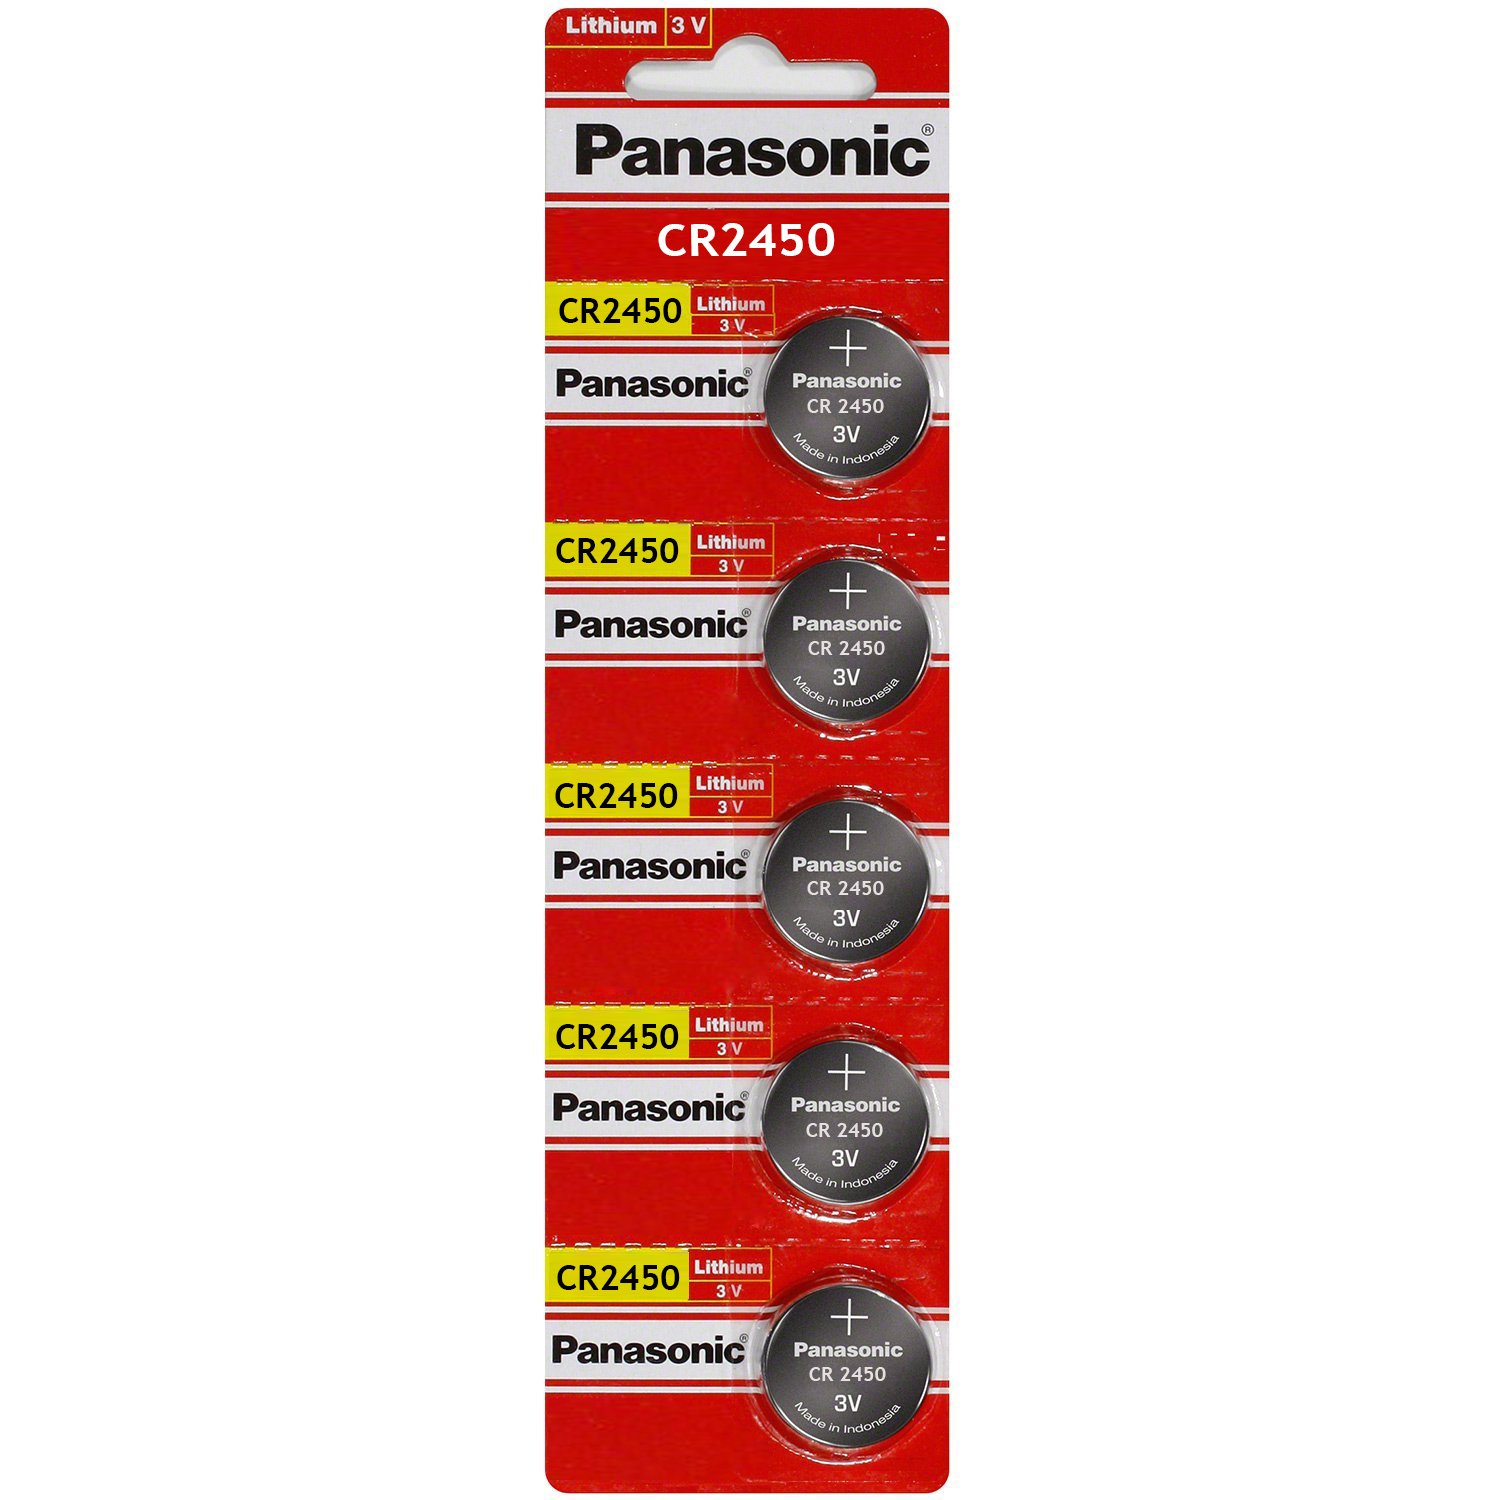 Panasonic PANASONIC-CR2450 620mAh 3V Lithium Primary Coin Cell Battery